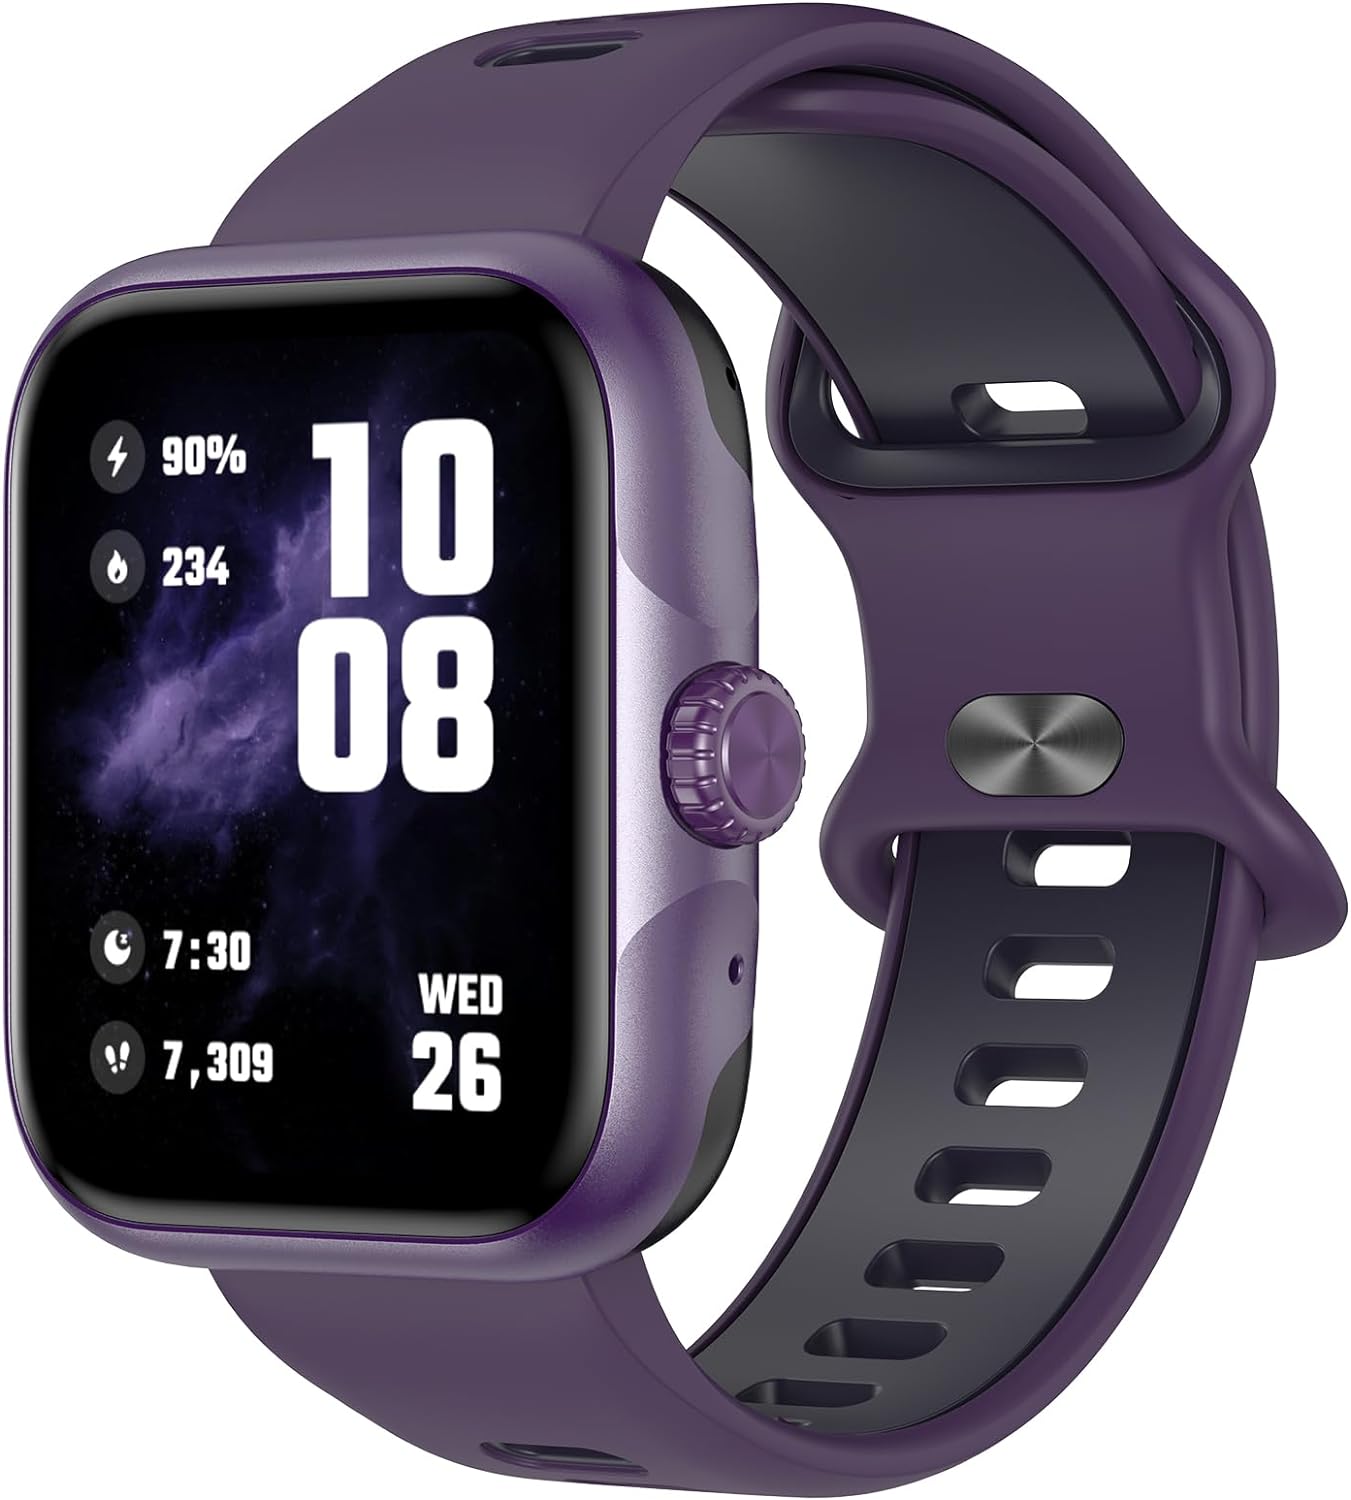 anyloop Smart Watch Ultra